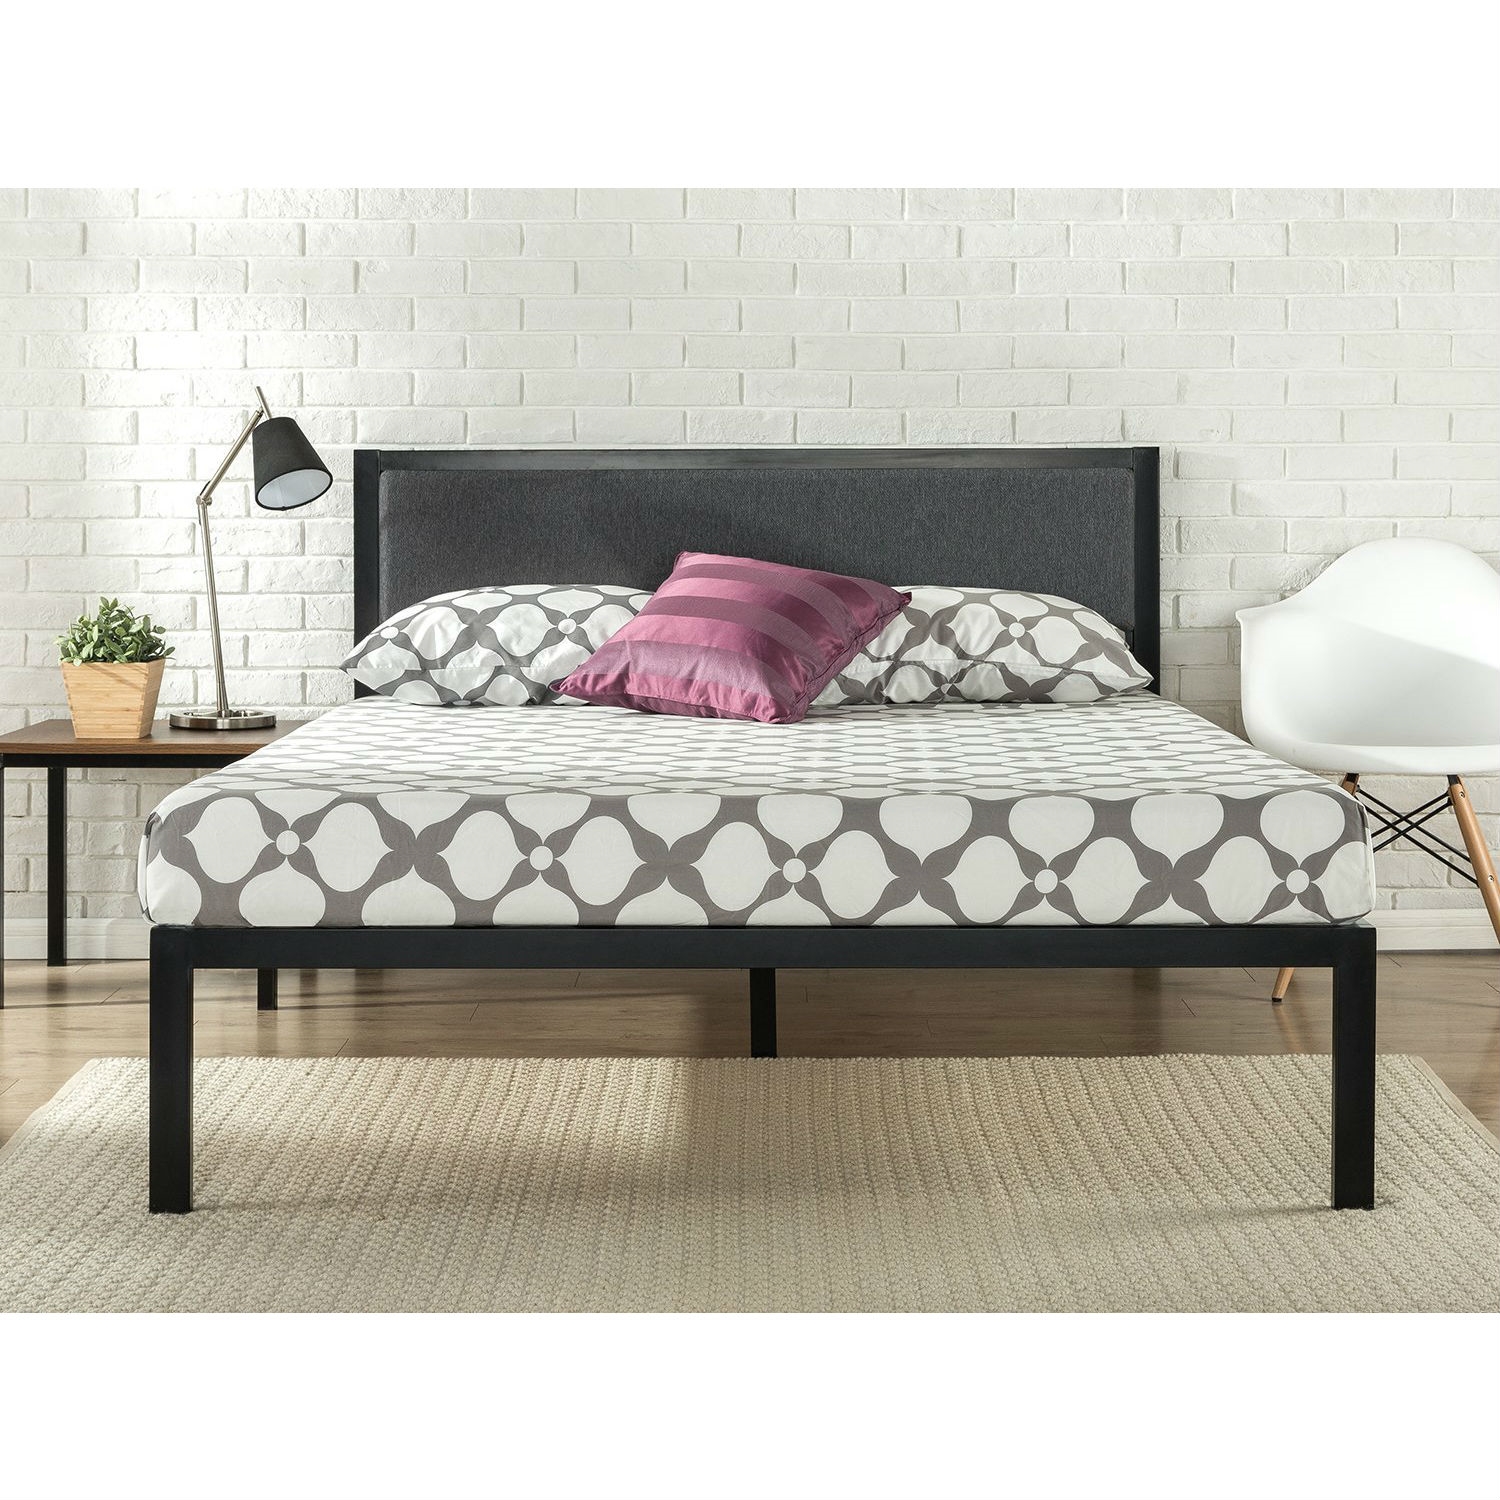 Full size Metal Platform Bed Frame with Wood Slats and Upholstered